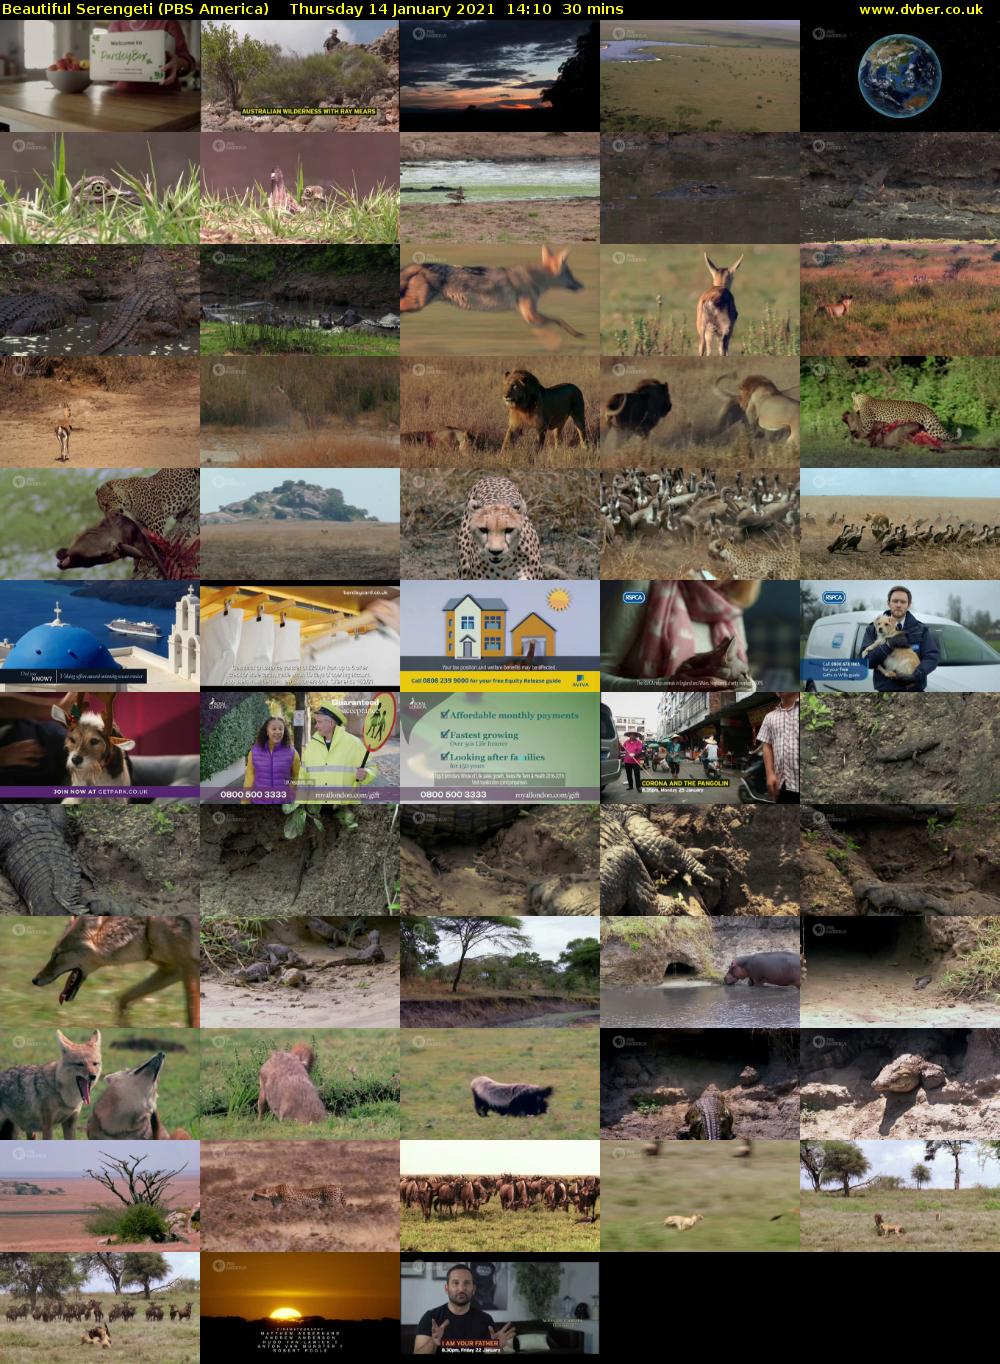 Beautiful Serengeti (PBS America) Thursday 14 January 2021 14:10 - 14:40